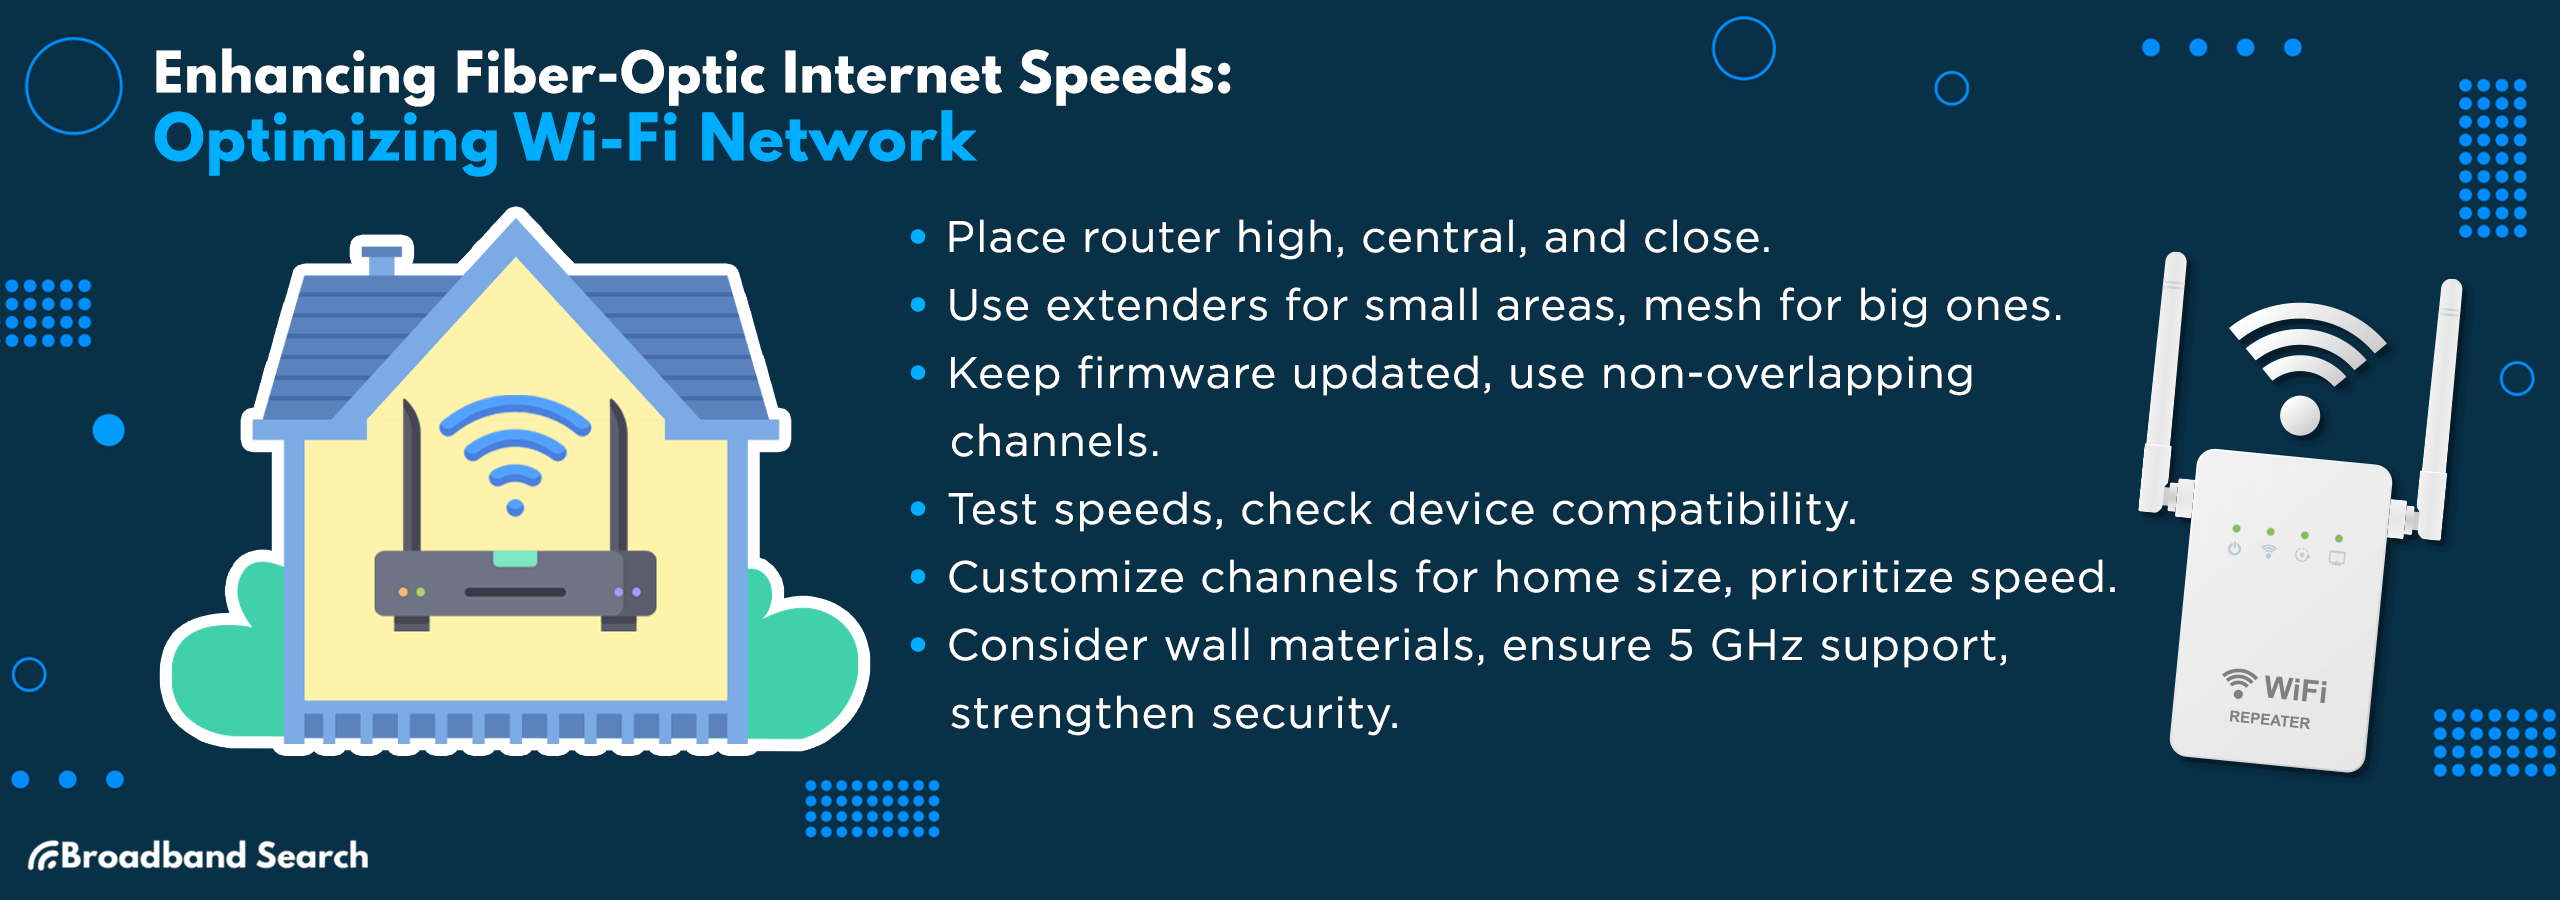 Tips on enhancing fiber-optic speeds: optimizing wi-fi network